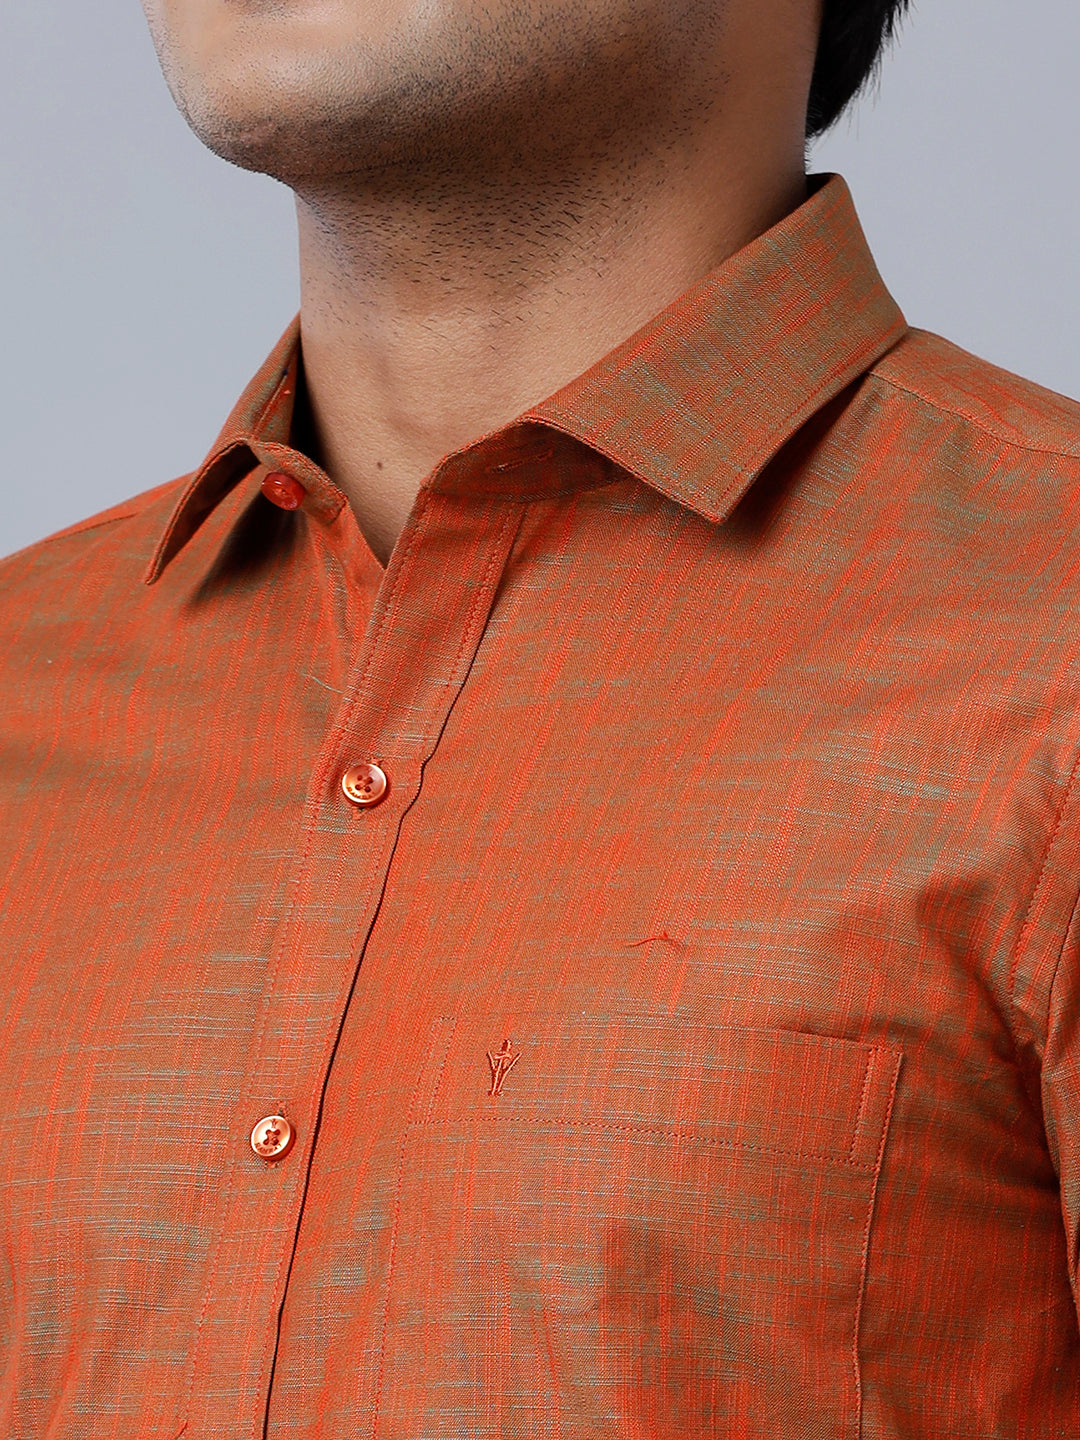 Mens Formal Shirt Half Sleeves Reddish Brown CL2 GT30-Zoom view